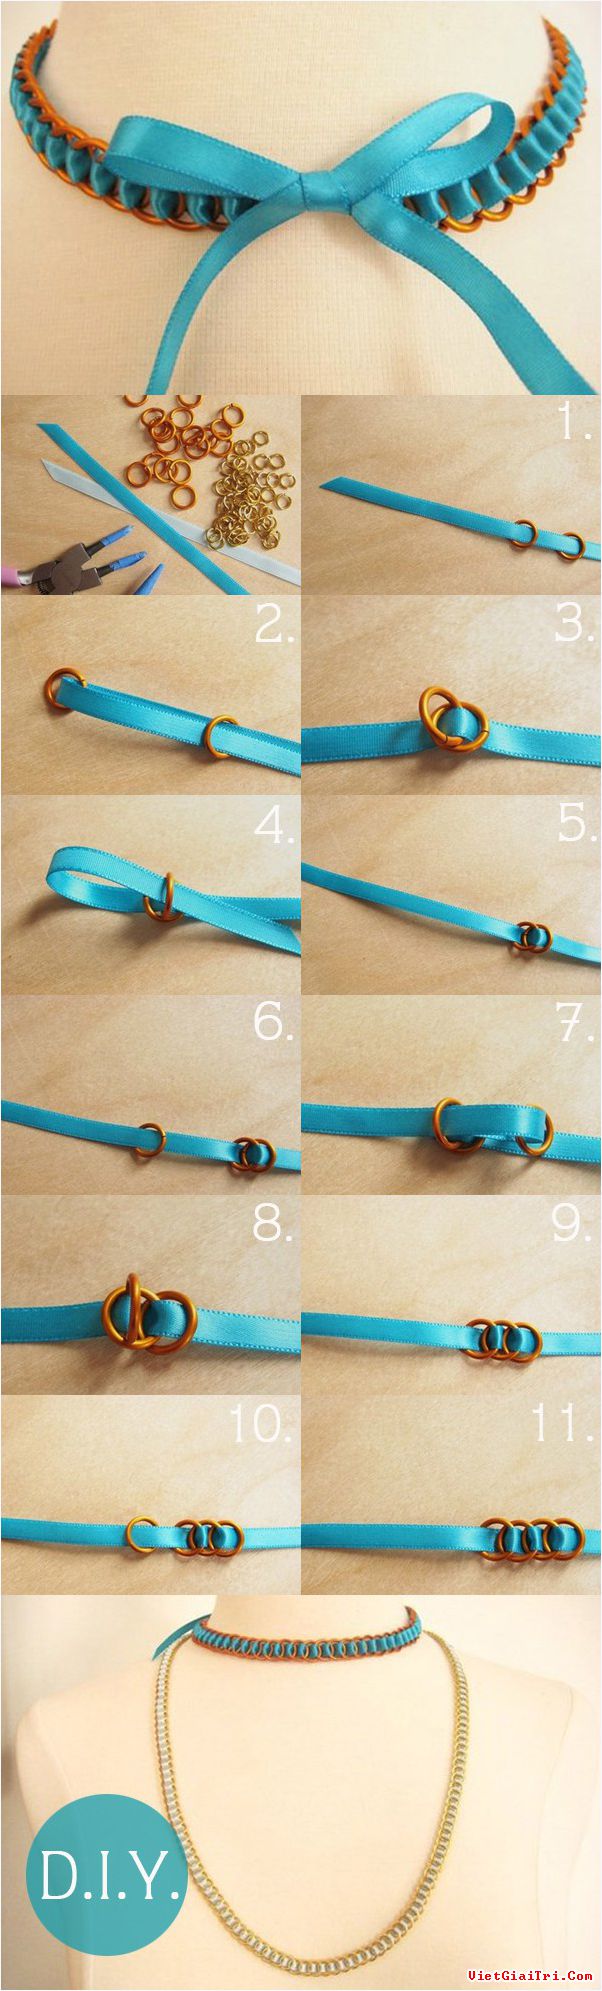 DIY Blue Chain Necklace Tutorial